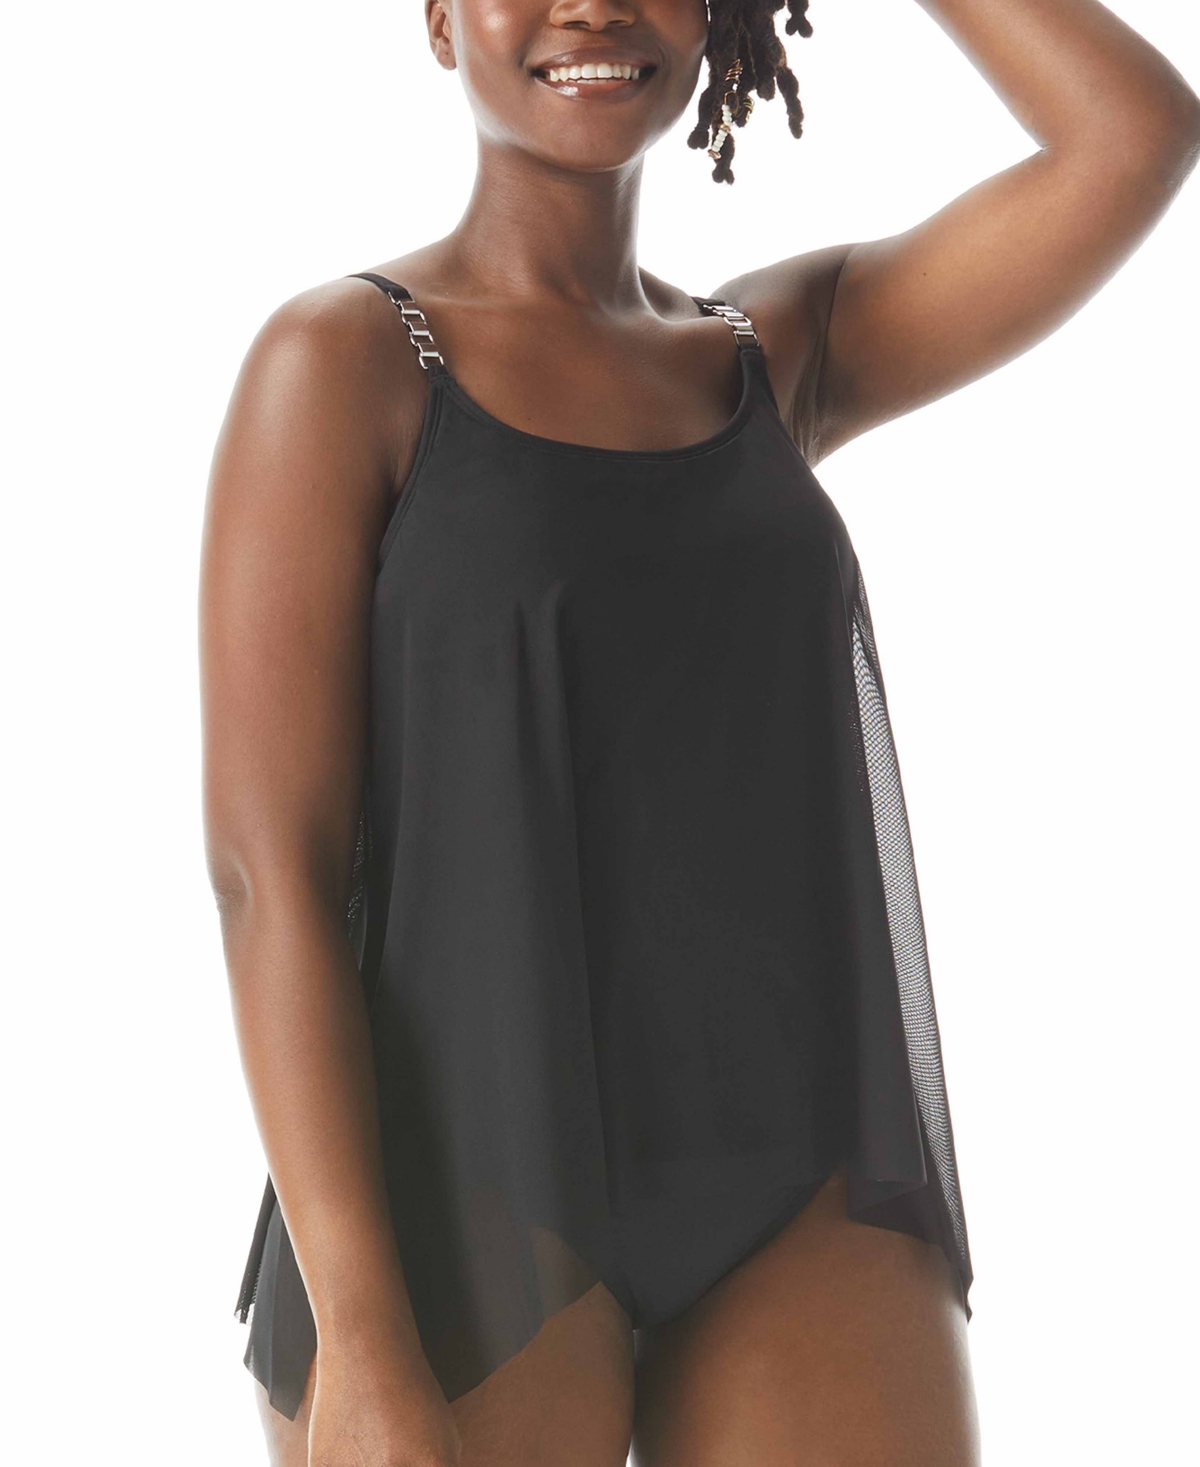 Coco Reef Current Mesh-Layer Bra-Sized Tankini Top Women's Swimsuit